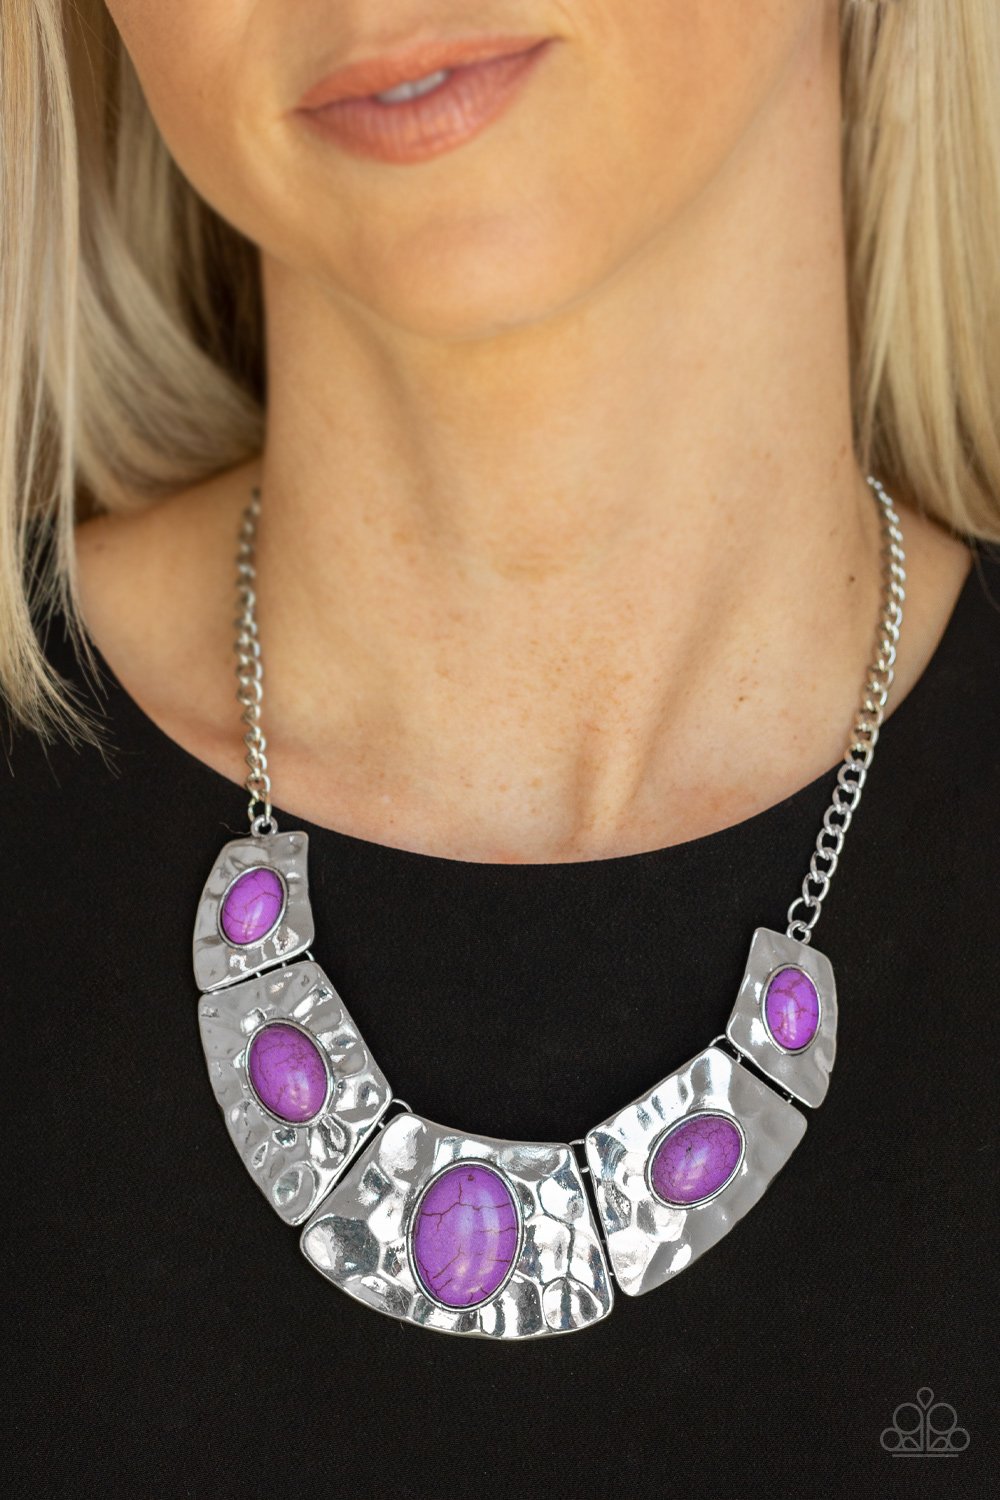 Ruler in Favor-purple-Paparazzi necklace